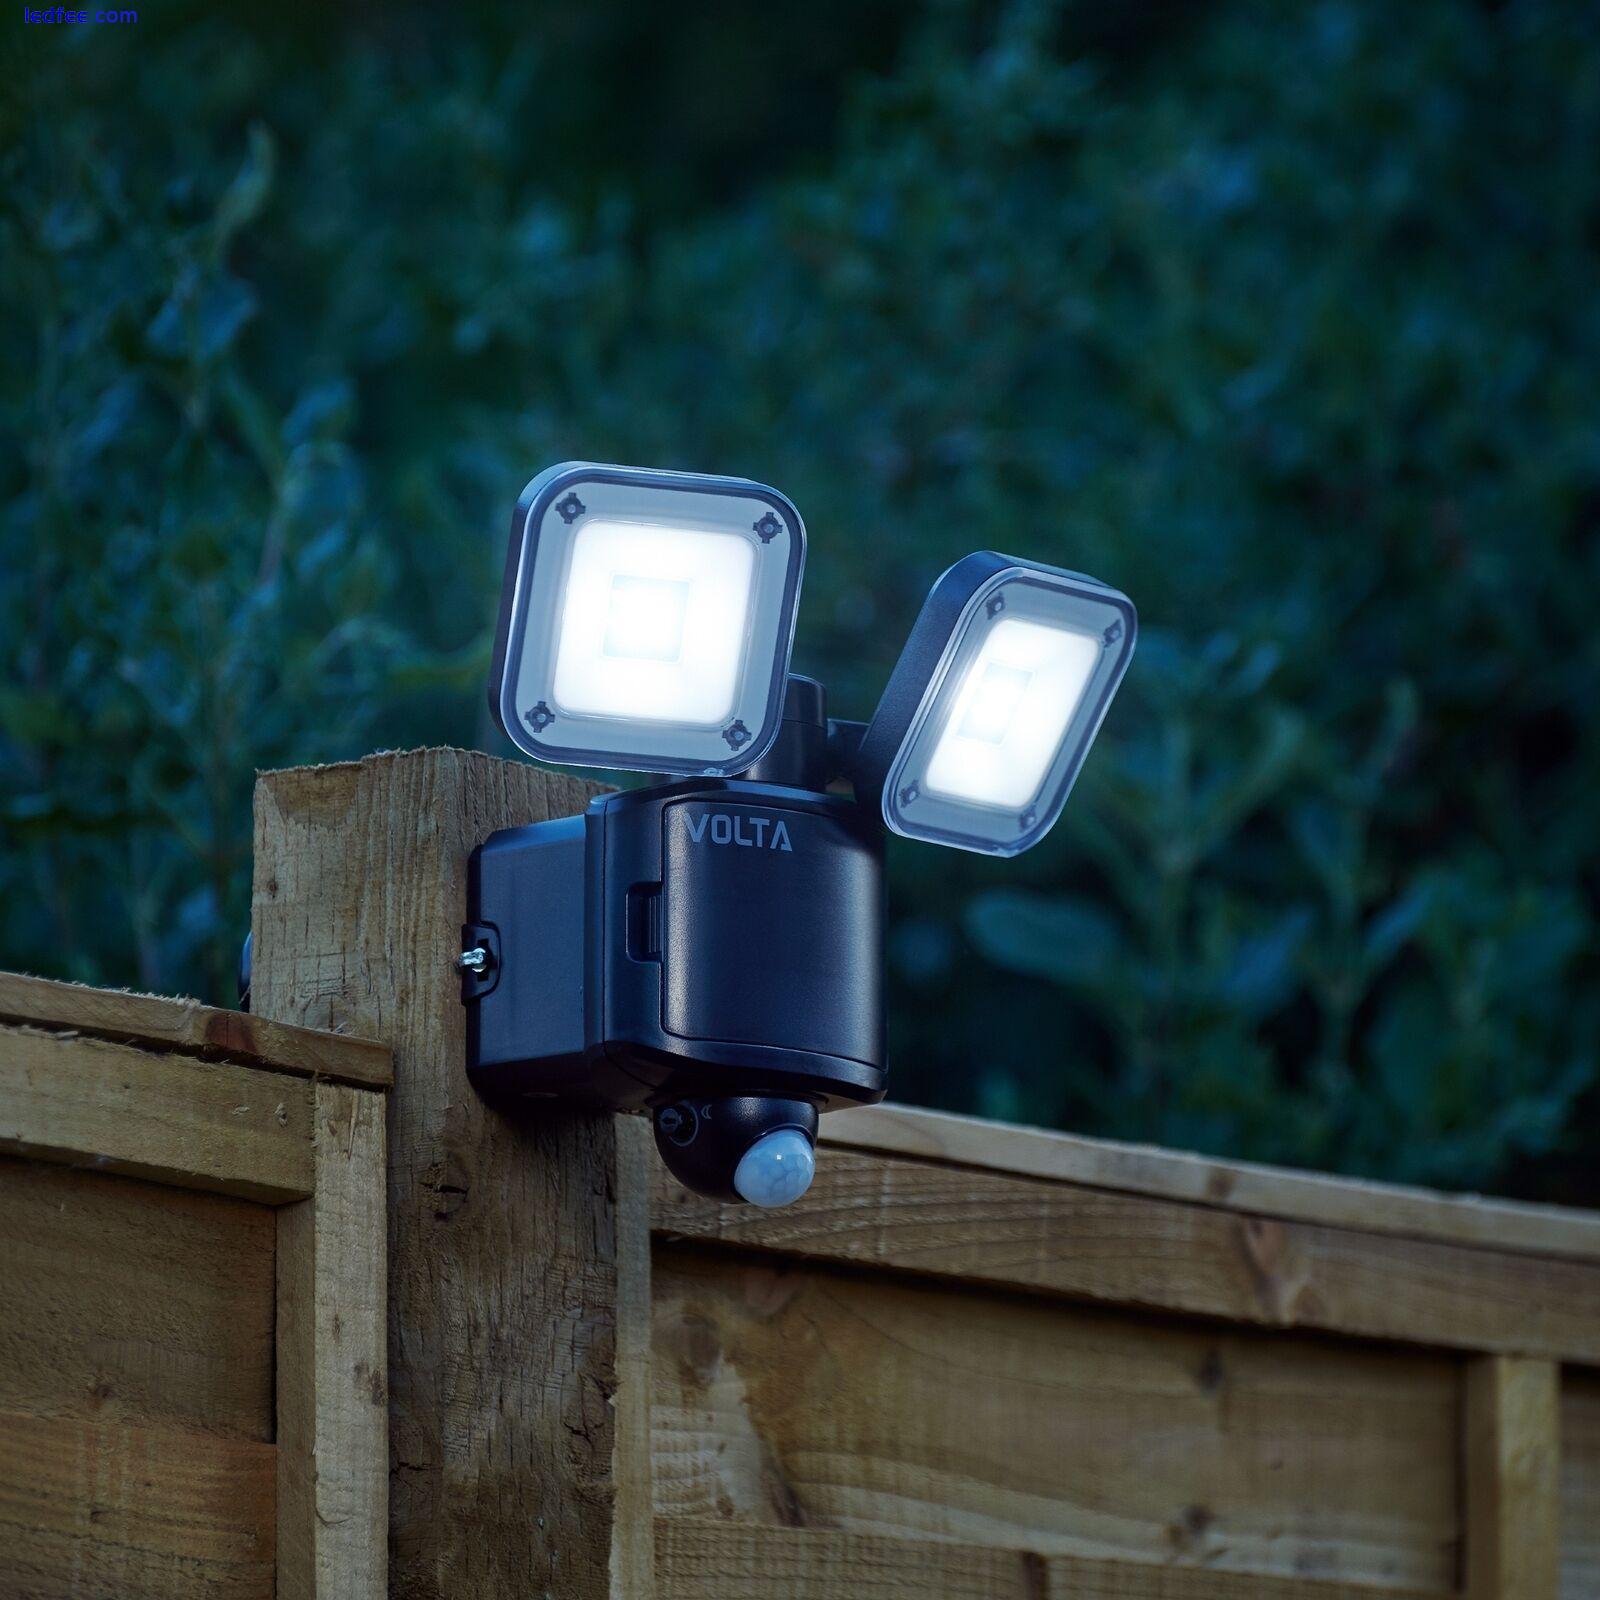 Auraglow Twin Lamp LED Flood Security Light Battery Powered PIR Motion Sensor 2 